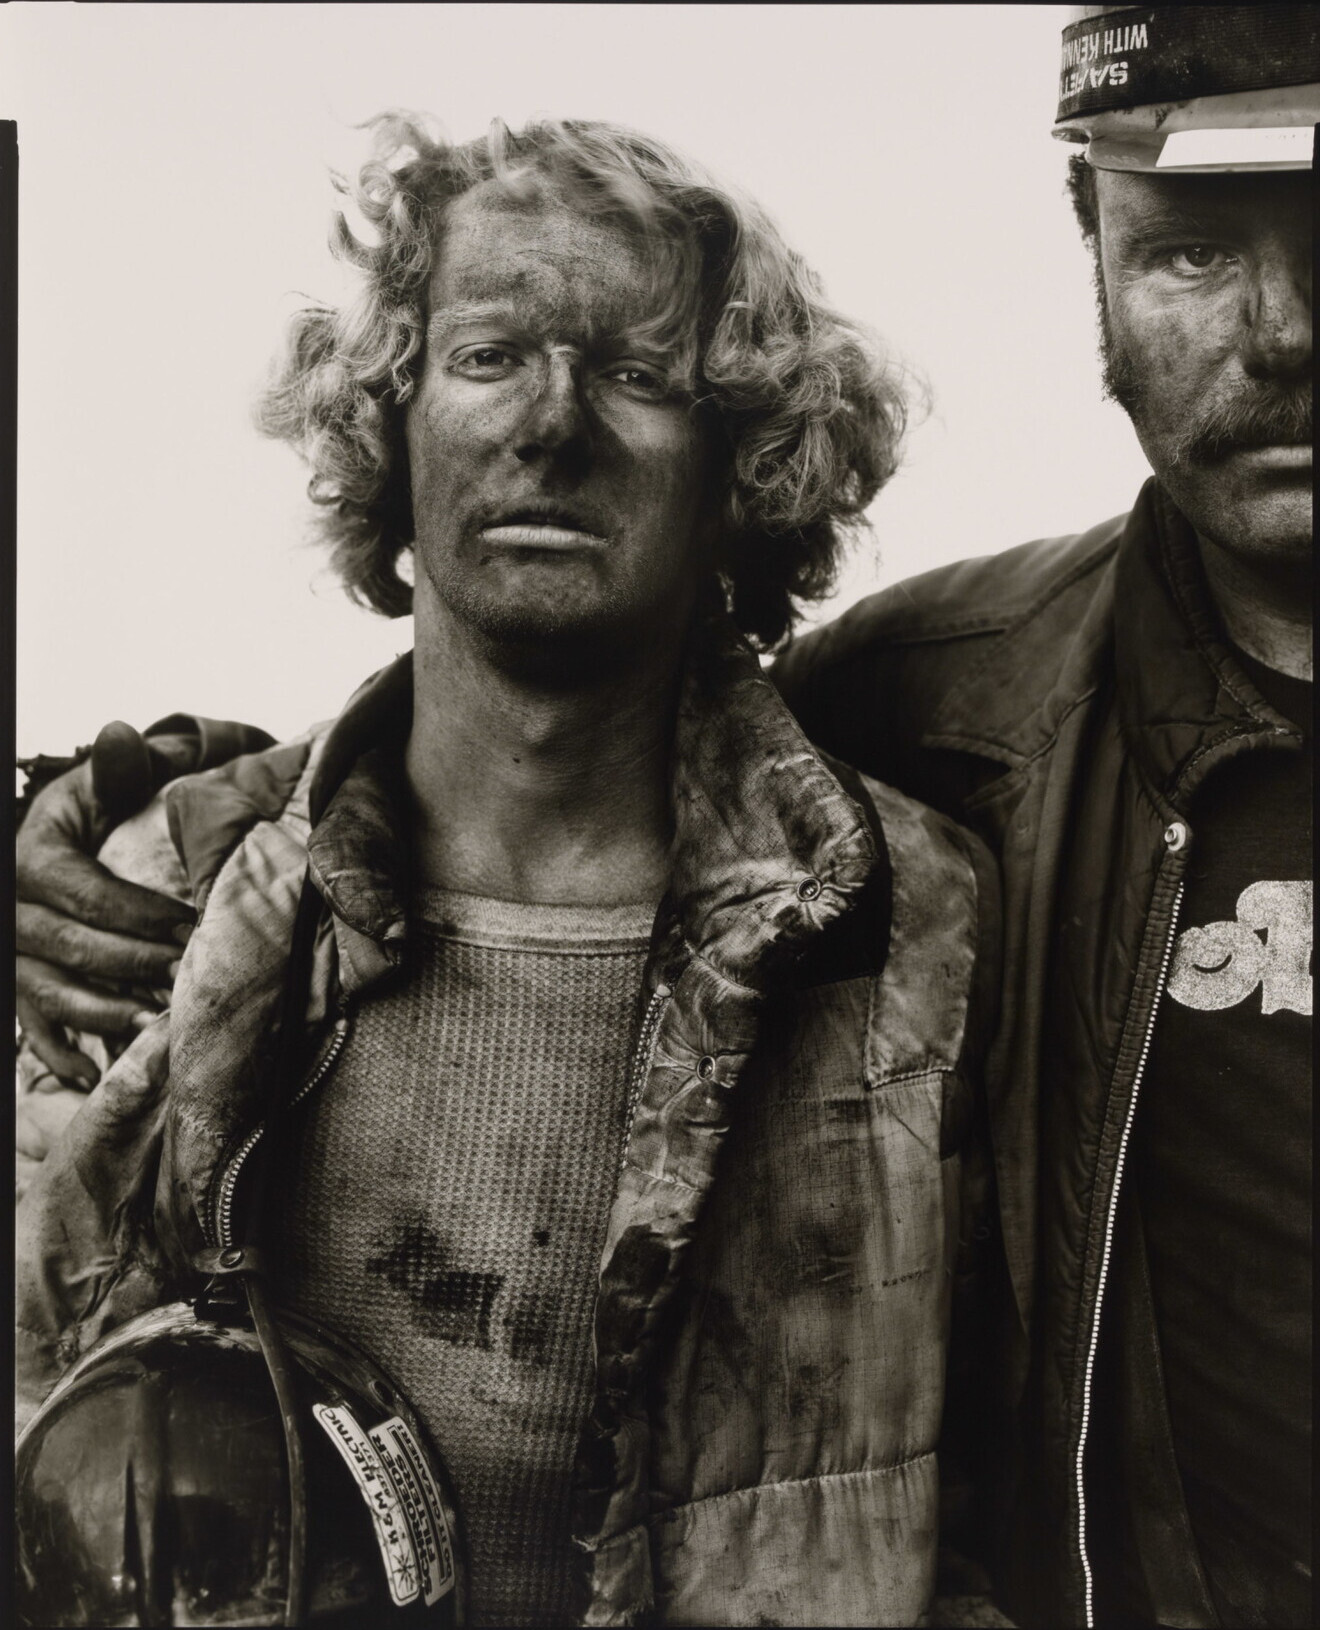 Майк Бенчич, Дэн Эшбергер, шахтеры, Сомерсет, Колорадо, 29 августа 1980 г. Фотограф Ричард Аведон